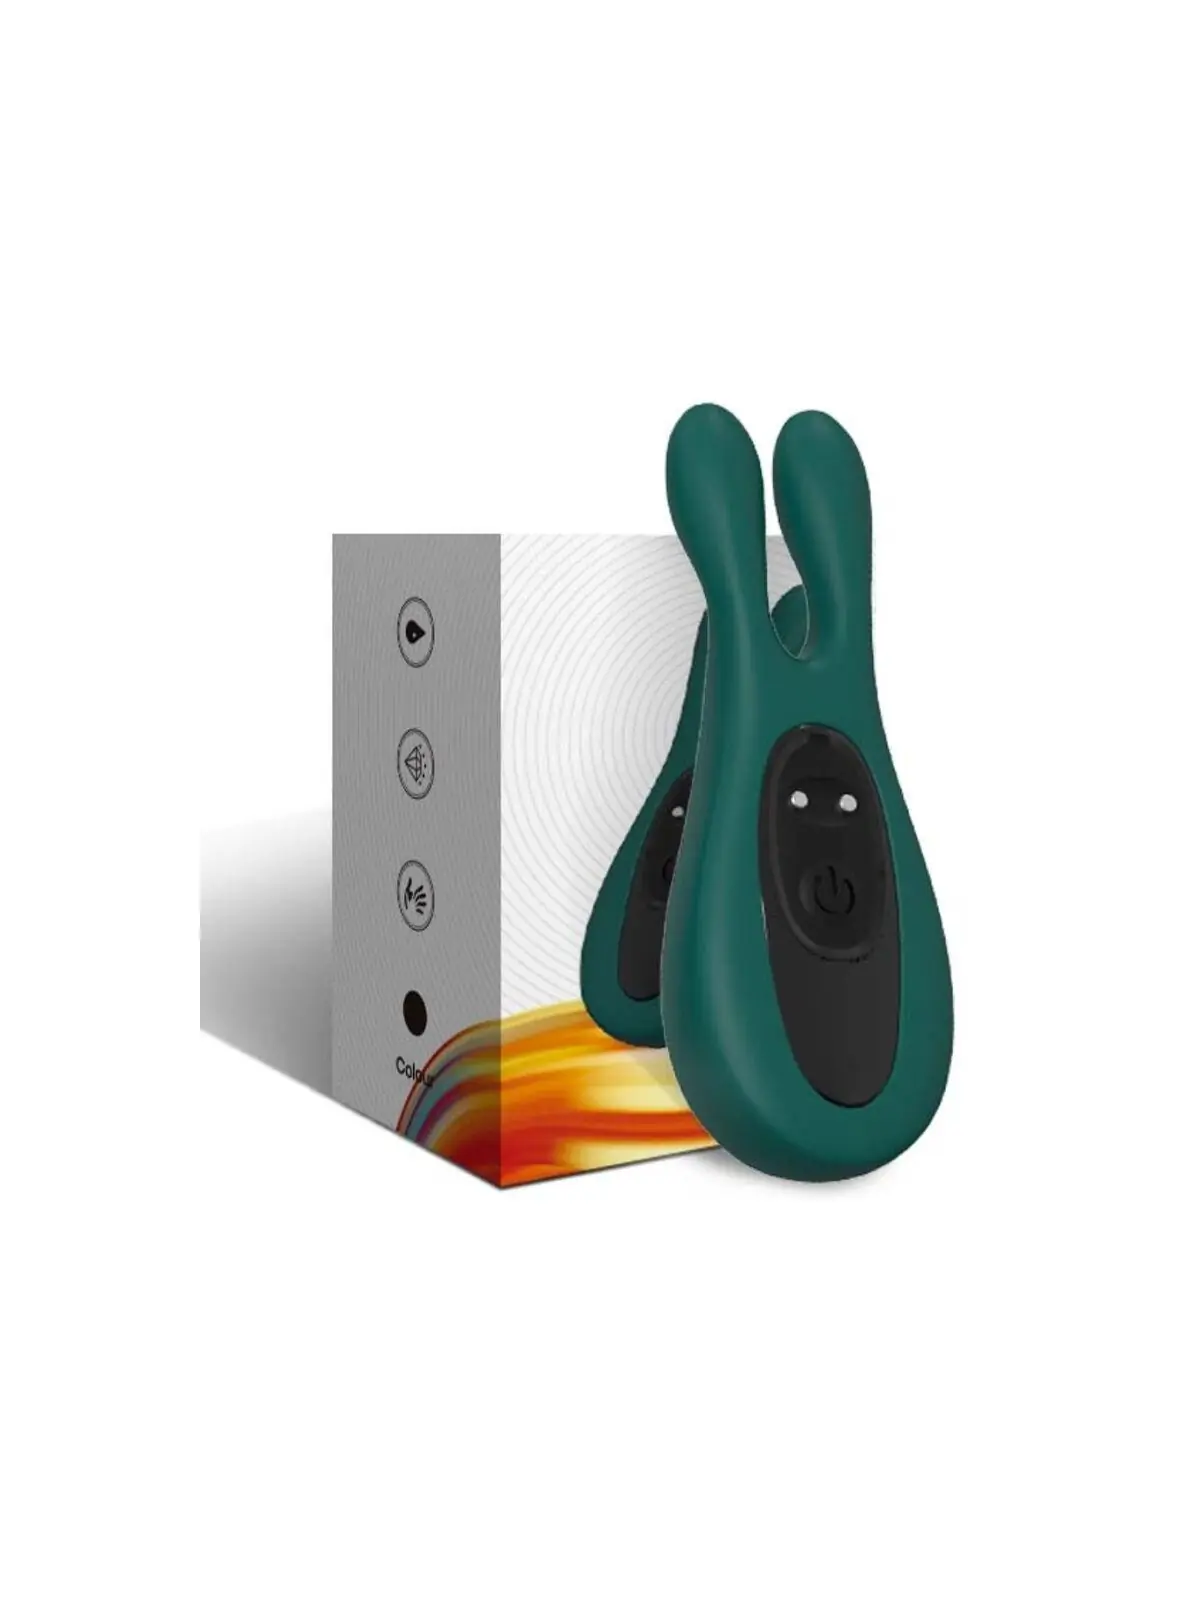 Stimulator & Vibrator Rabbit Grün von Armony Stimulators kaufen - Fesselliebe